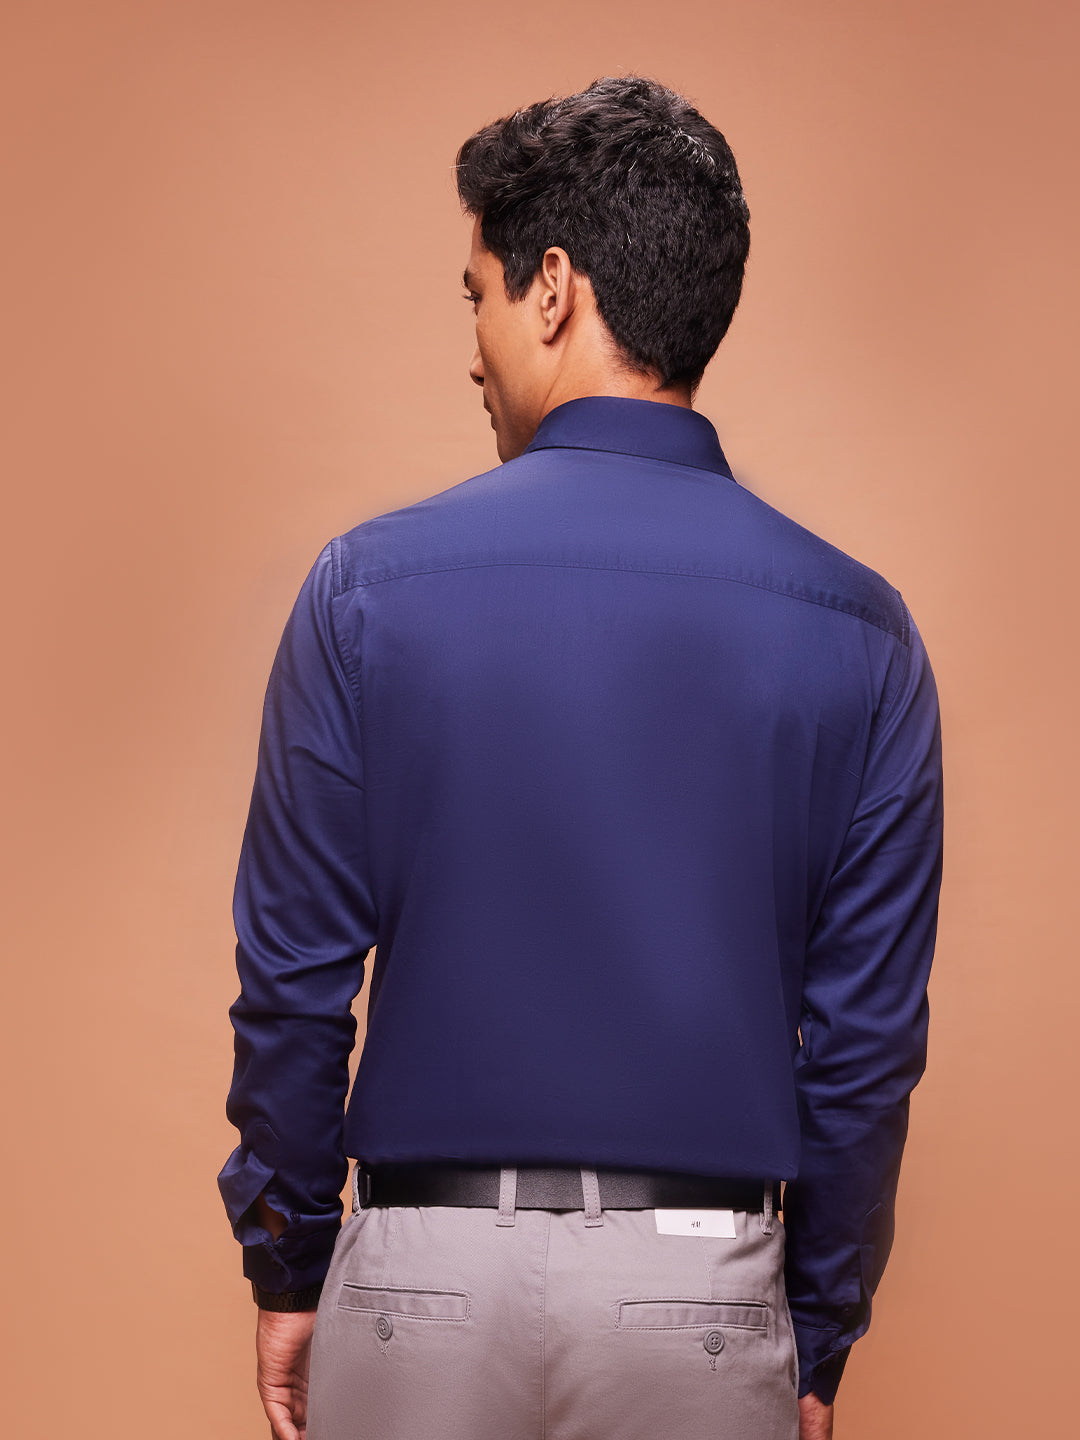 Bombay High Men's Royal Navy Premium Cotton Solid Shirt